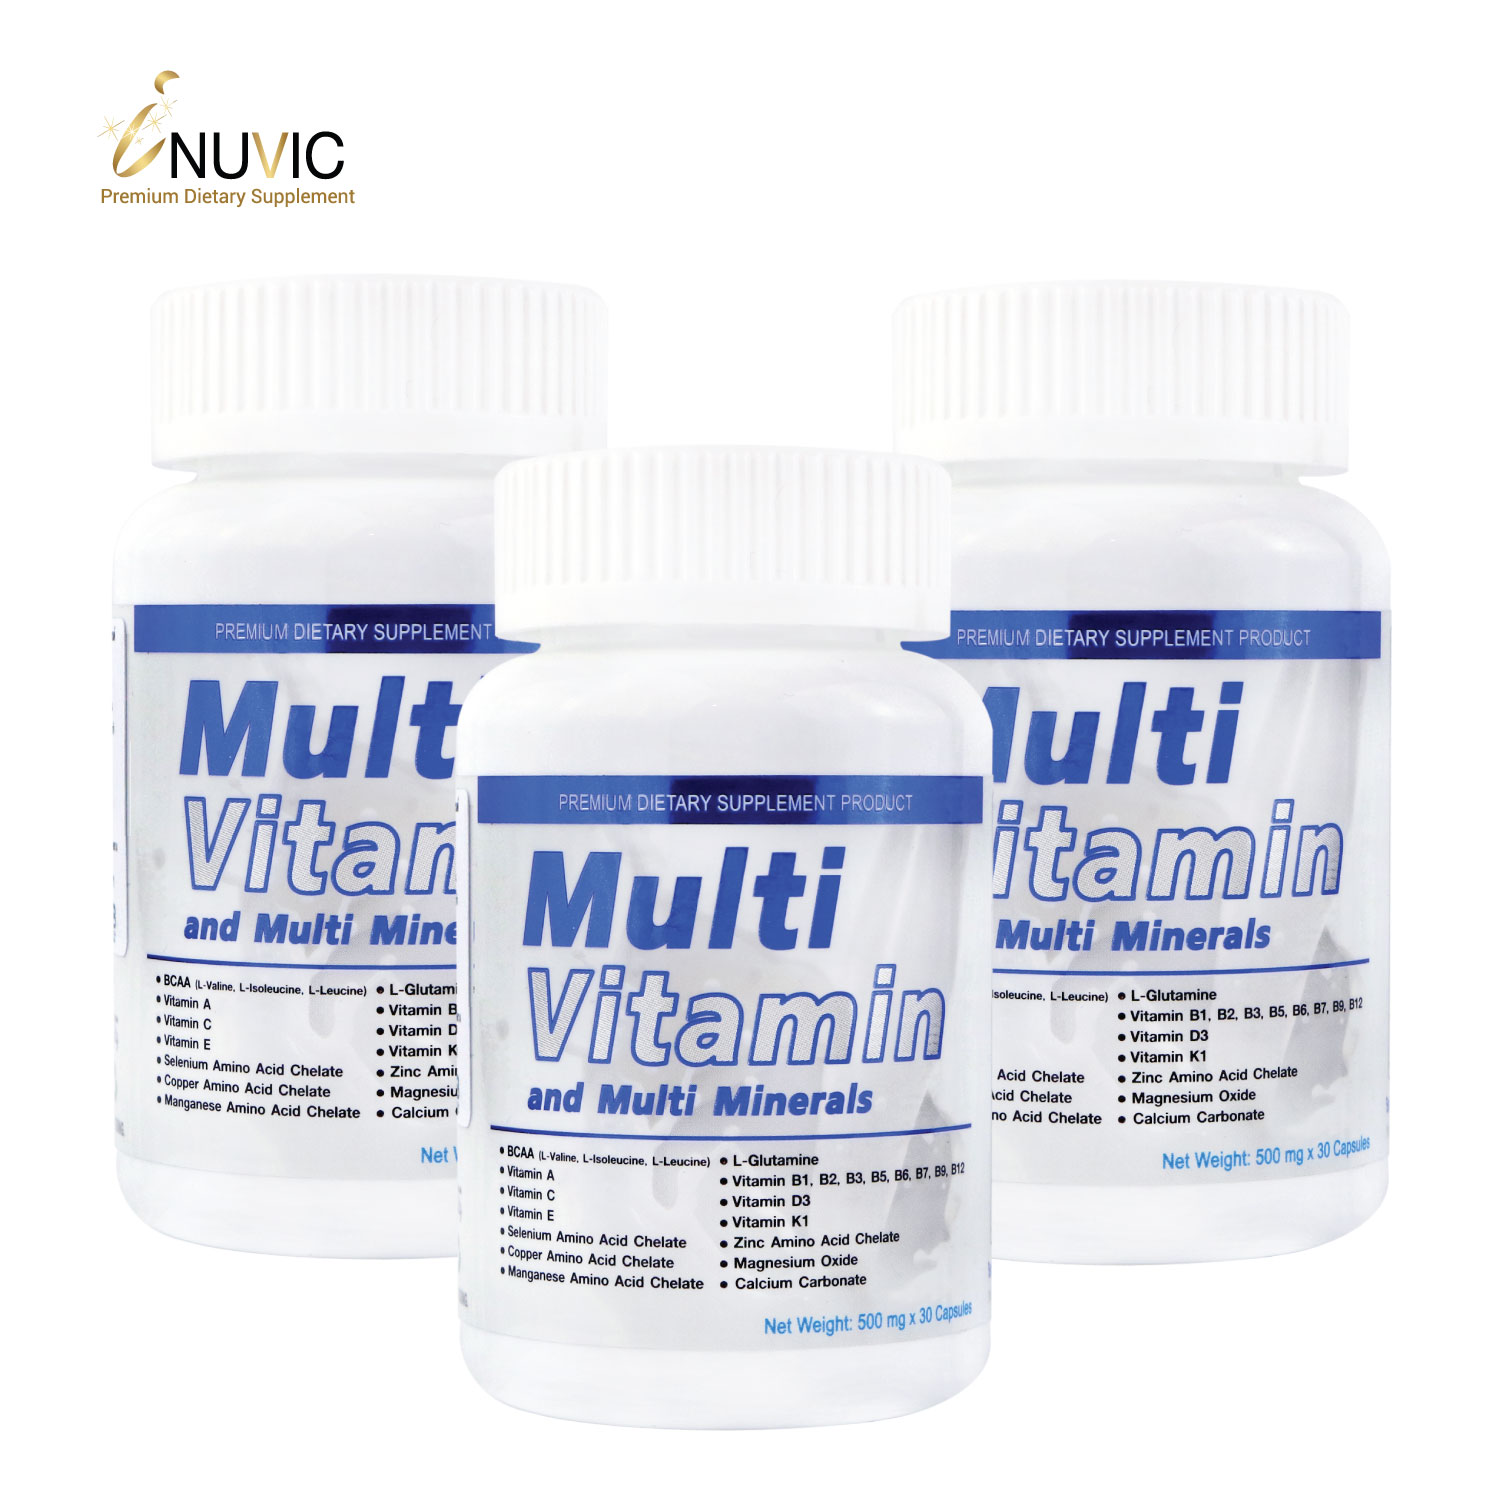 Multi Vitamin and Multi Minerals INUVIC x 3 ขวด อินูวิค วิตามินรวม และ แร่ธาตุรวม 24 ชนิด มัลติวิตามิน แอนด์ มัลติมิเนอรัล  Multivitamin and Multiminerals